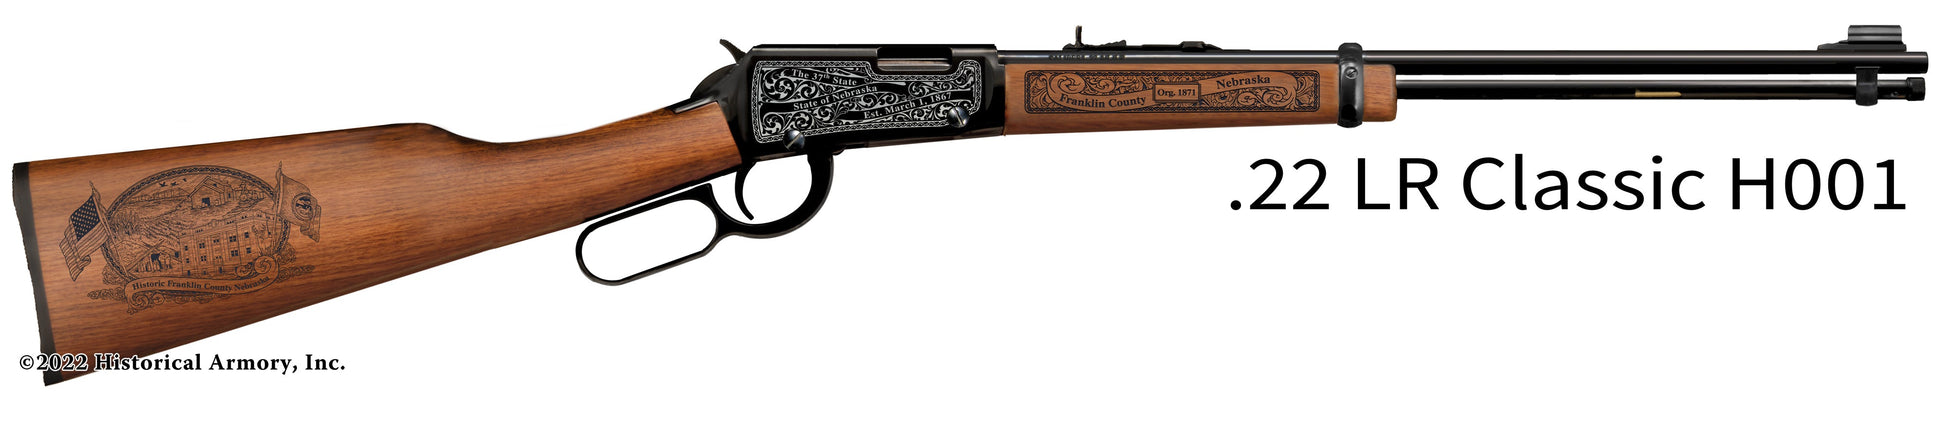 Franklin County Nebraska Engraved Henry H001 Rifle